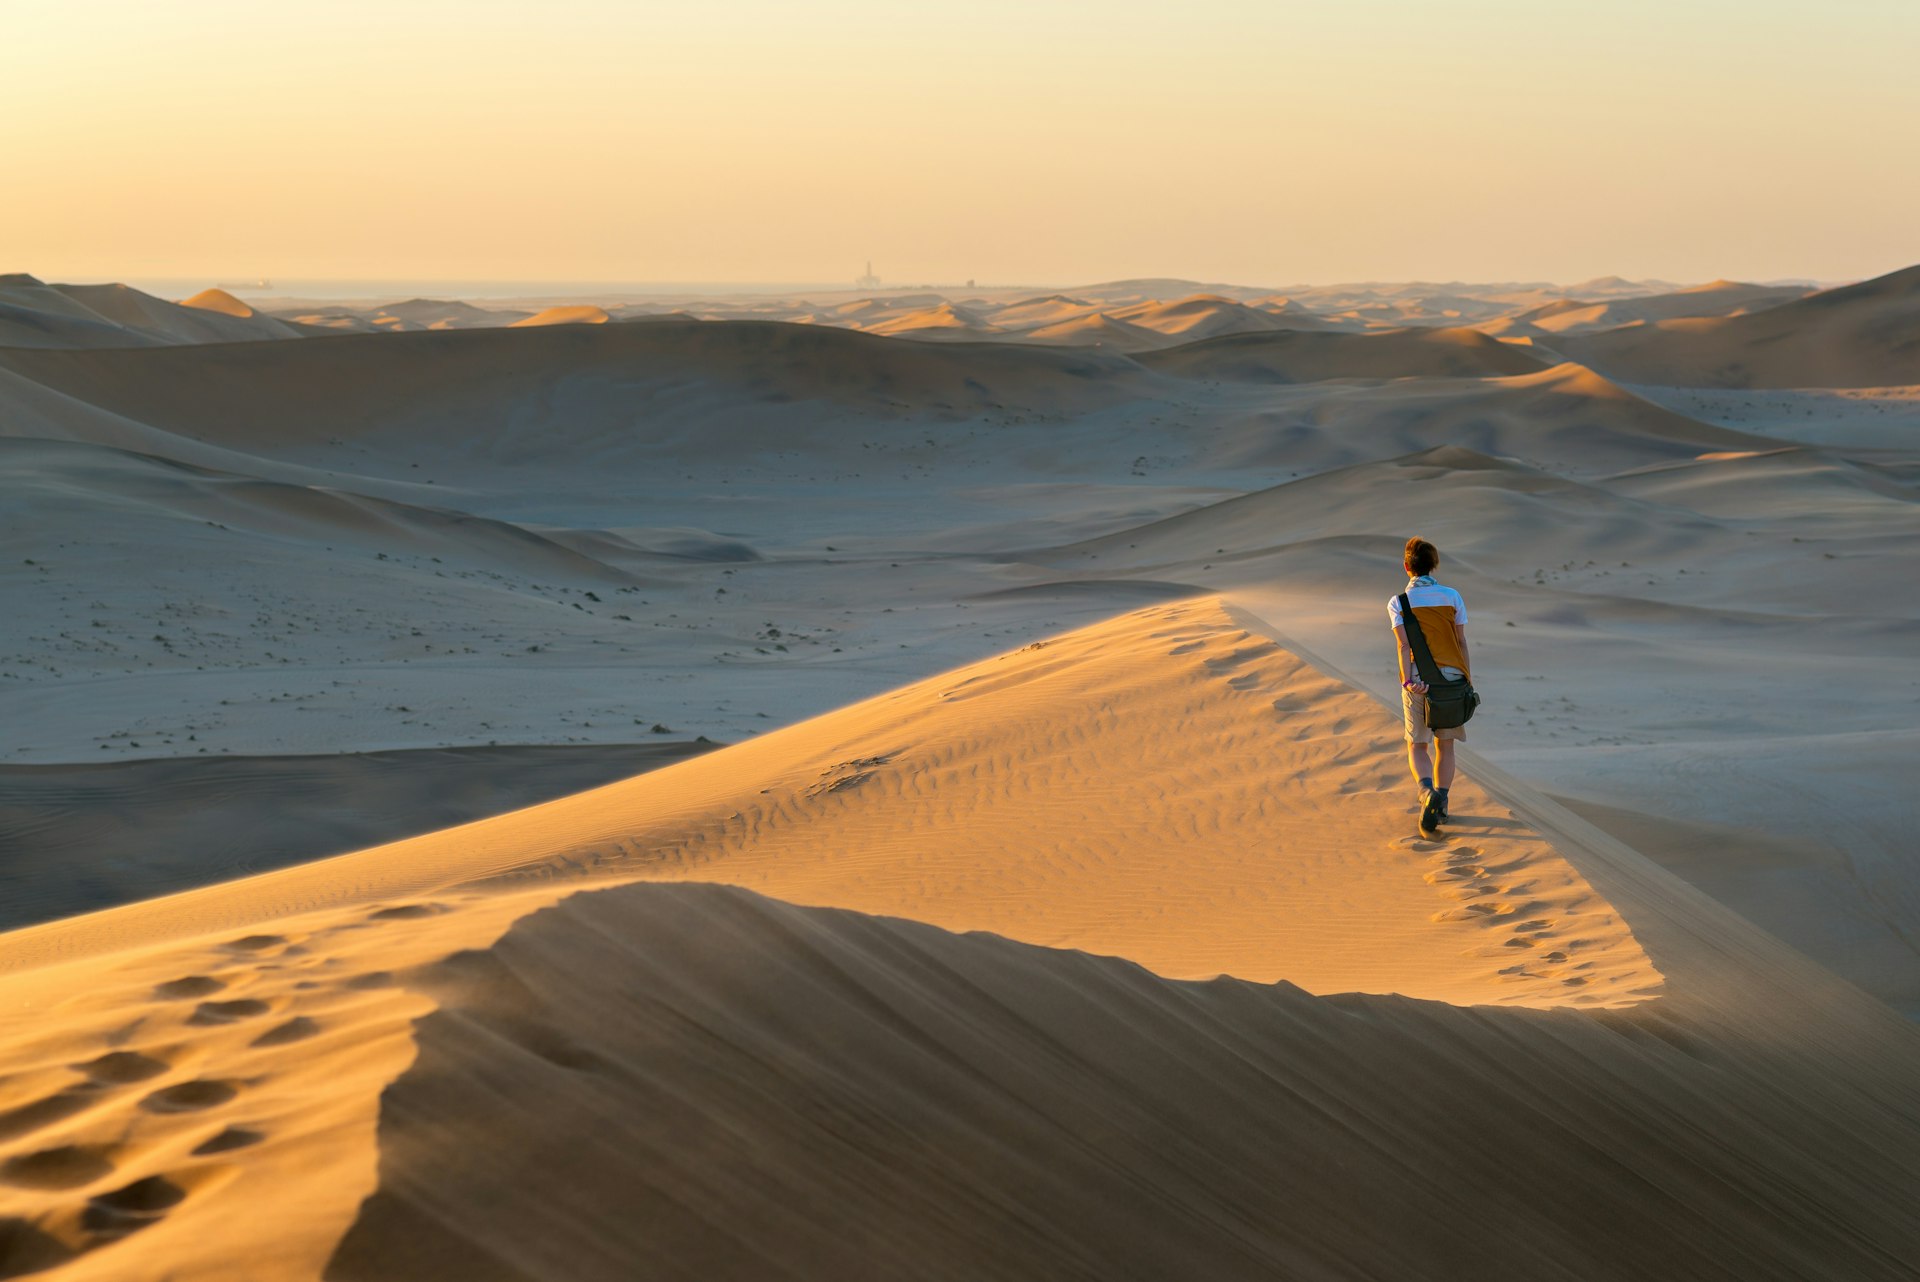 A tourist walks on the scenic dunes of Sossusvlei, Namib desert, Namib-Naukluft National Park, Namibia, Africa